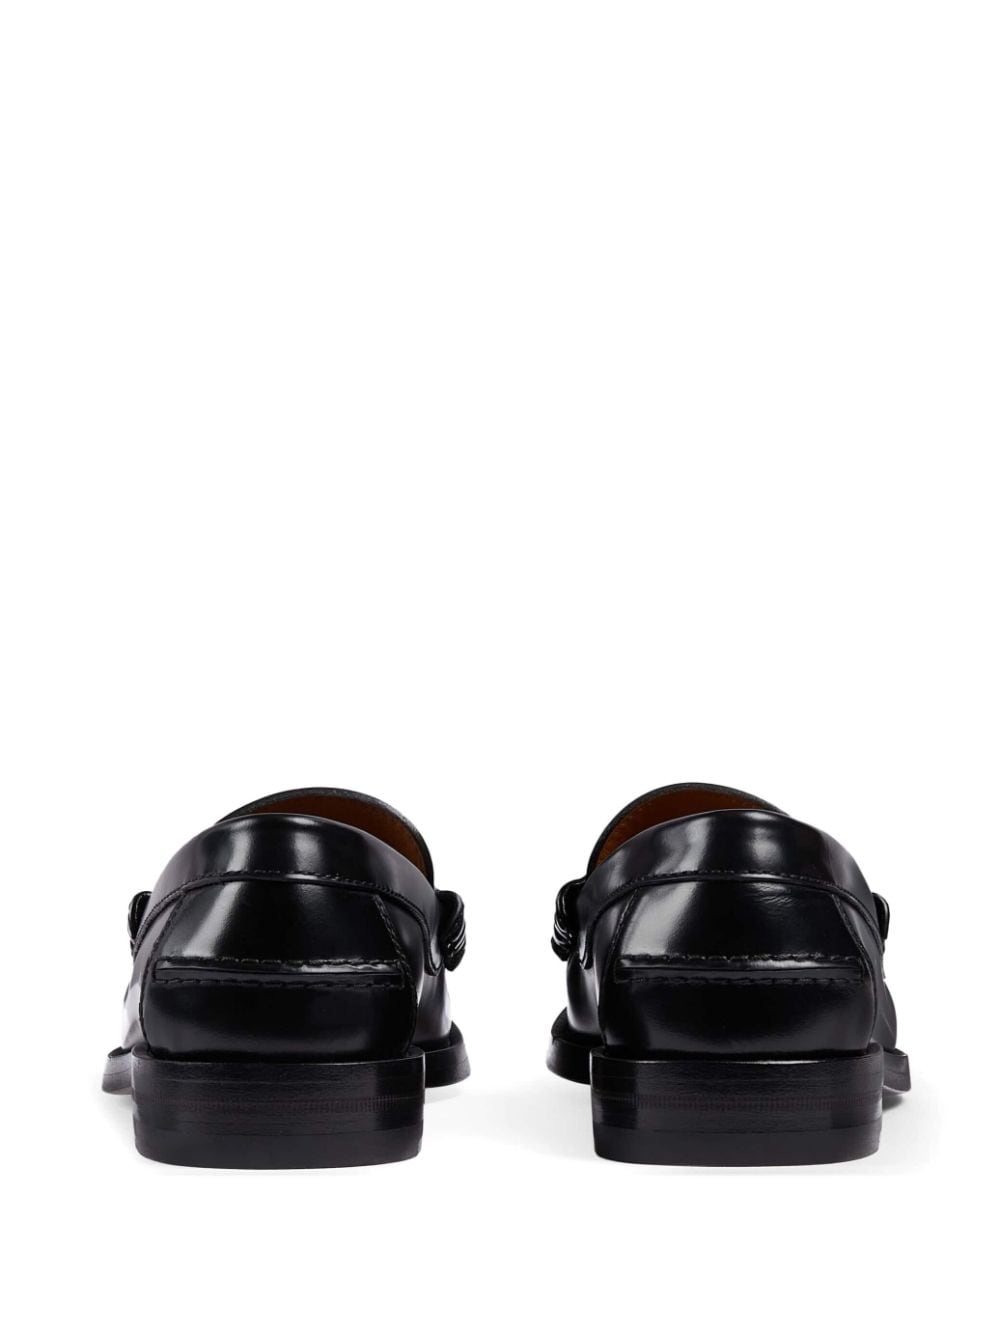 Gucci Interlocking G Leather Loafers - Farfetch